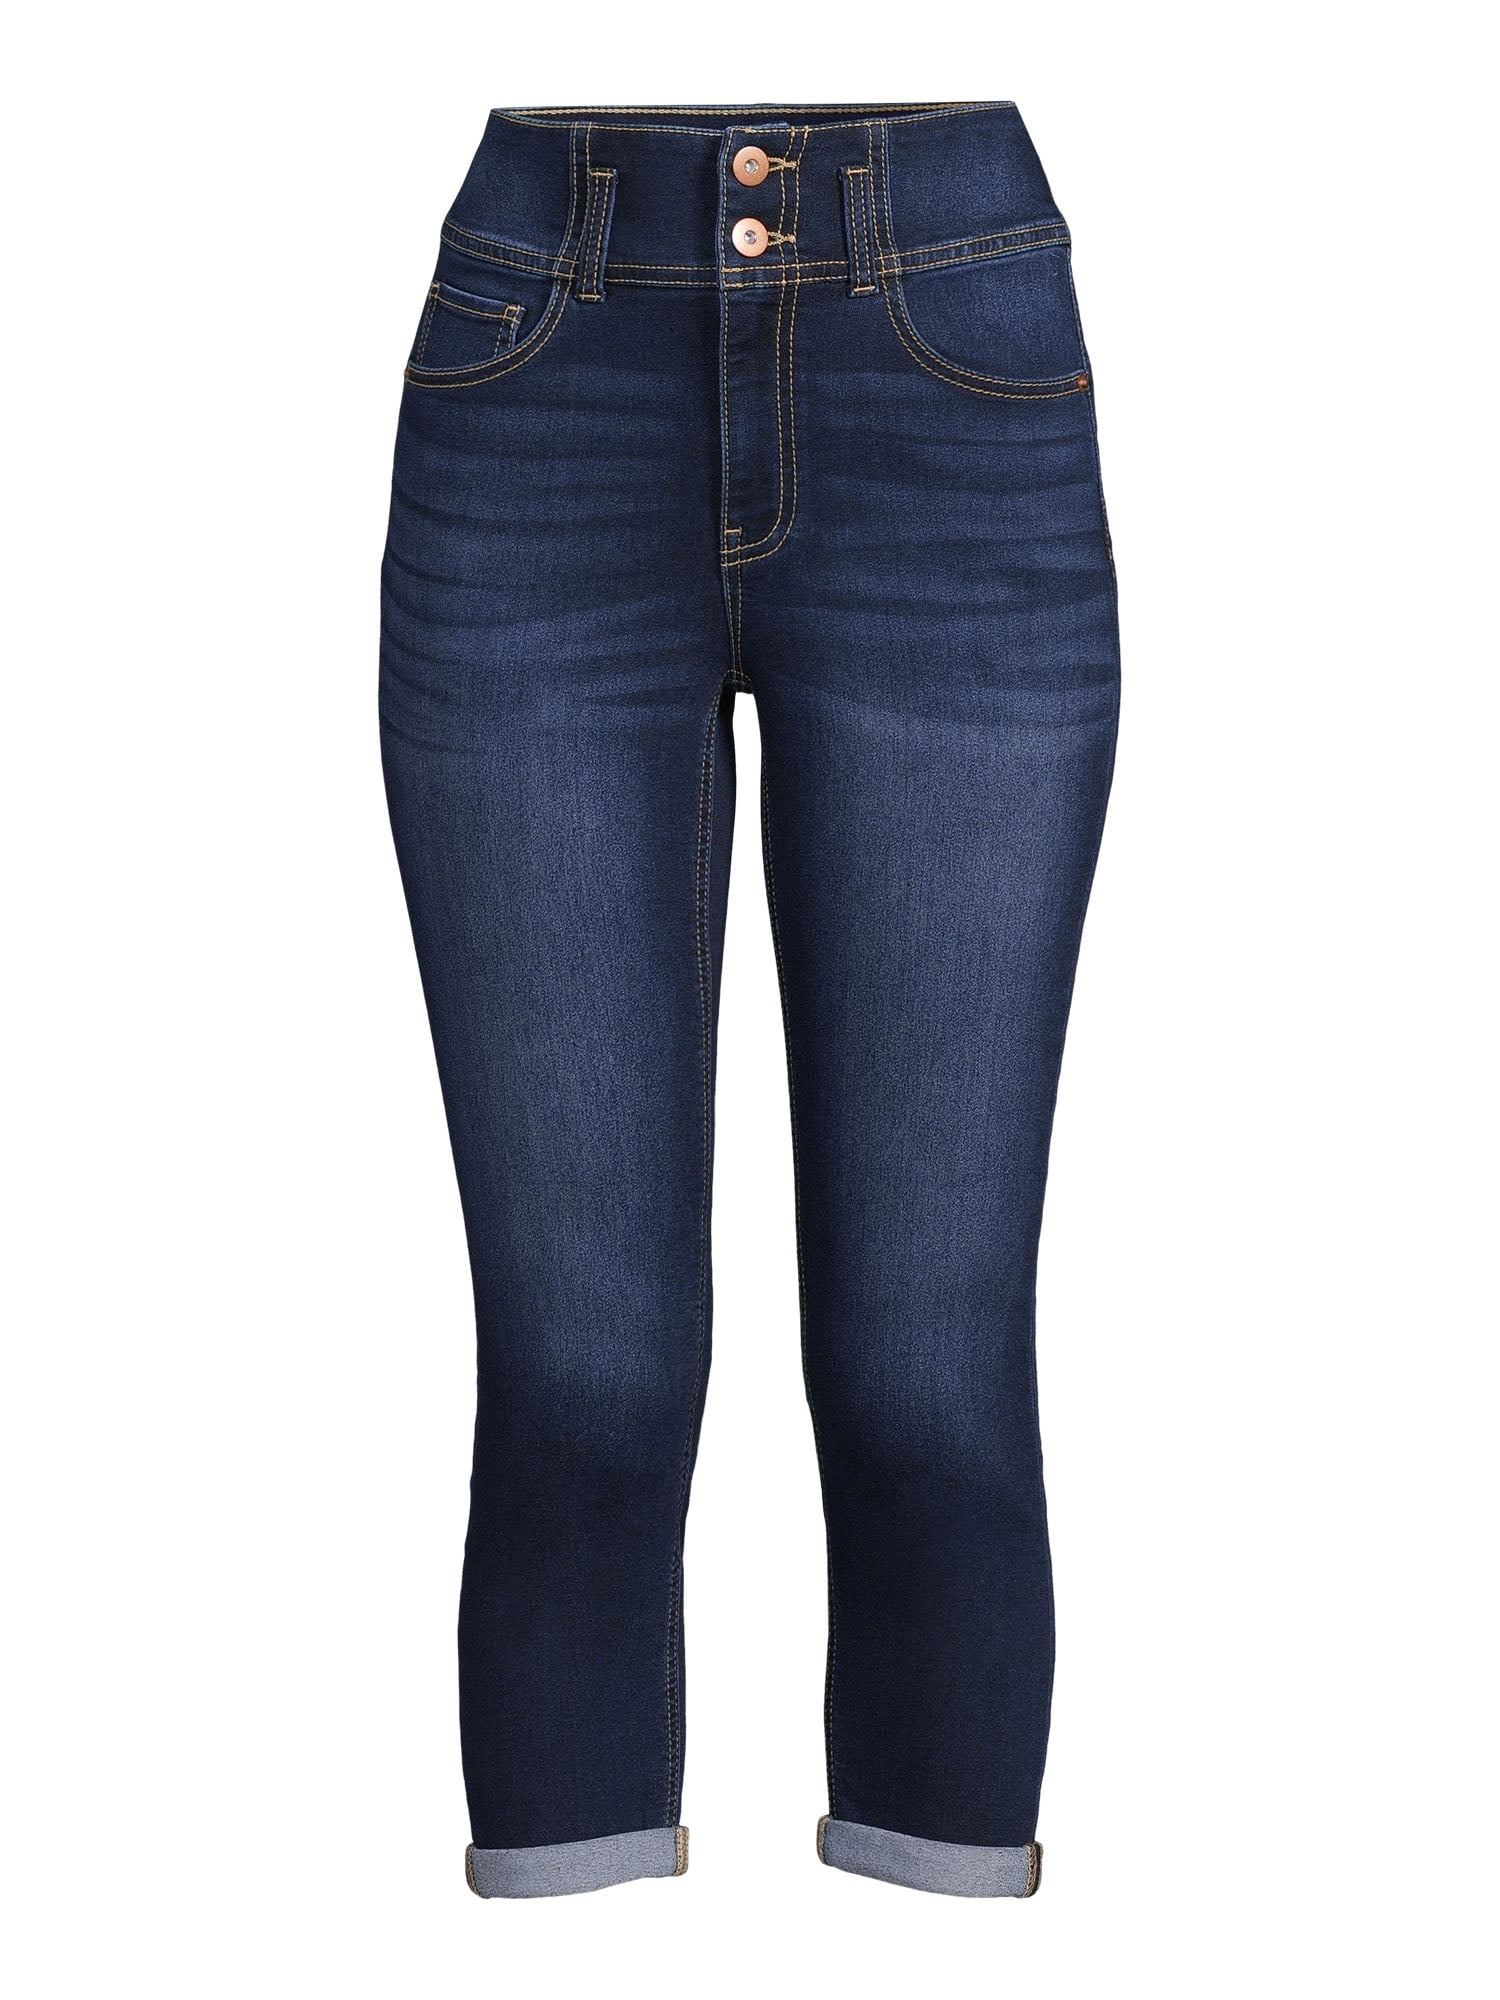 WMNS Corset Style Extra High Waist Line Button Line Front Jeans - Blue